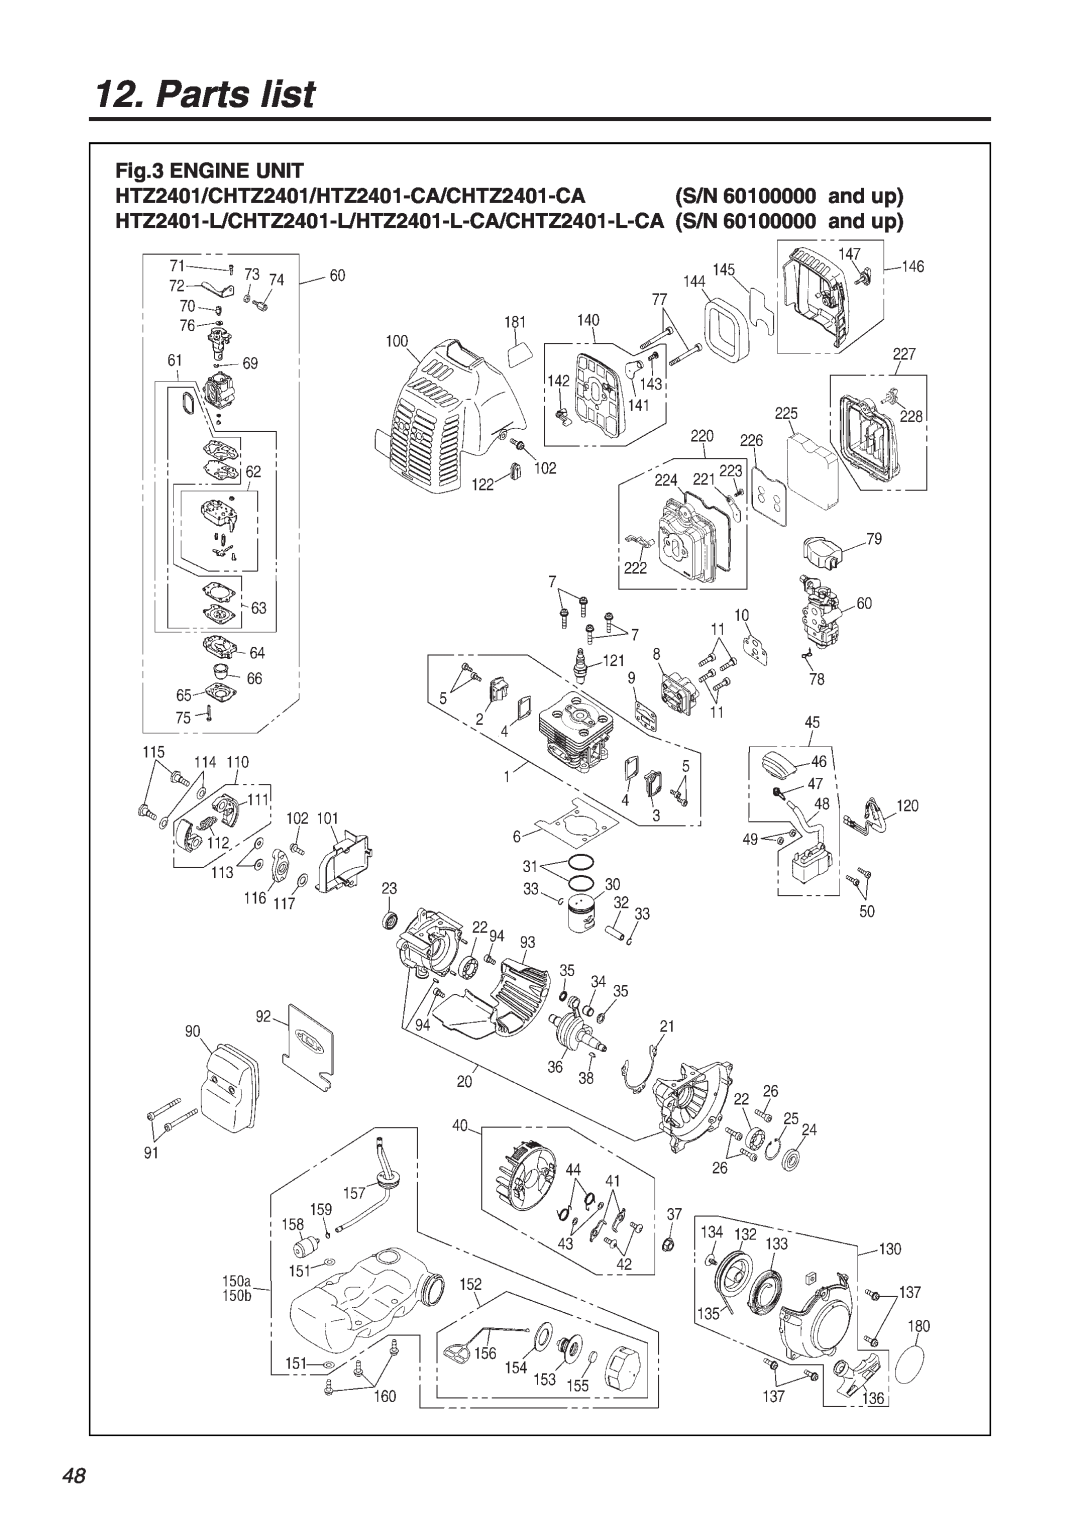 RedMax CHTZ2401-CA, CHTZ2401L-CA manual Engine Unit, Parts list 